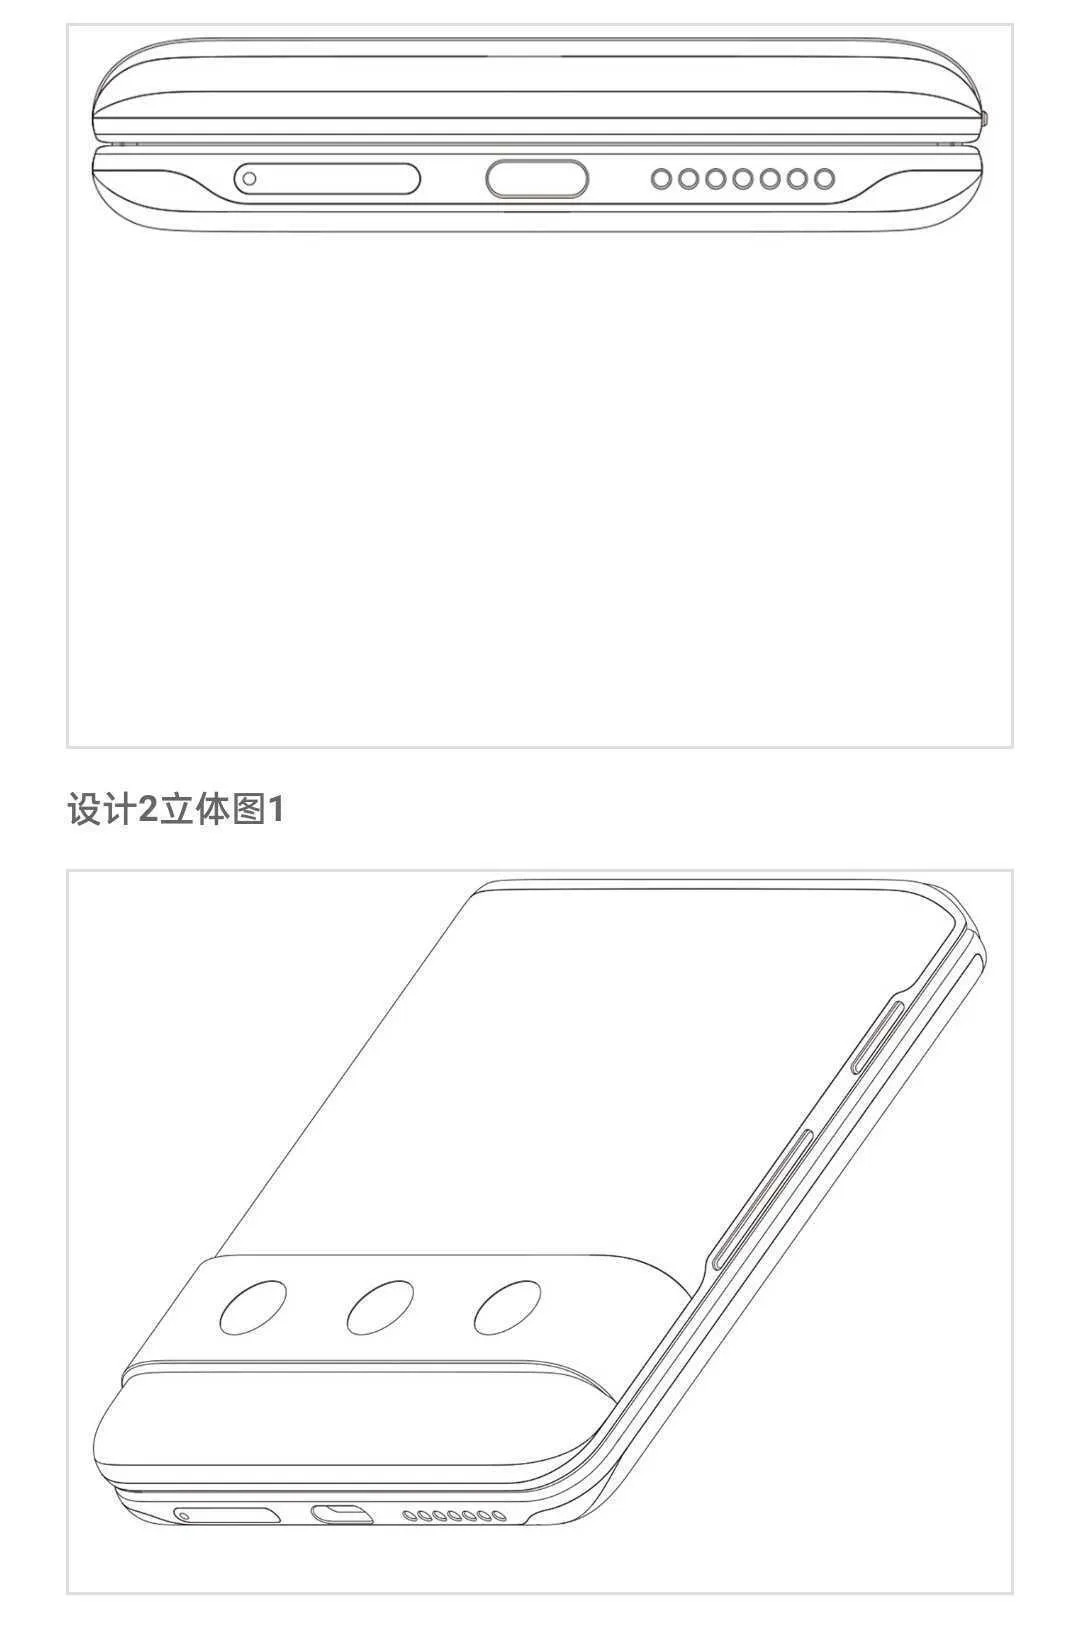 xiaomi-smartphone-pliable-design-brevet